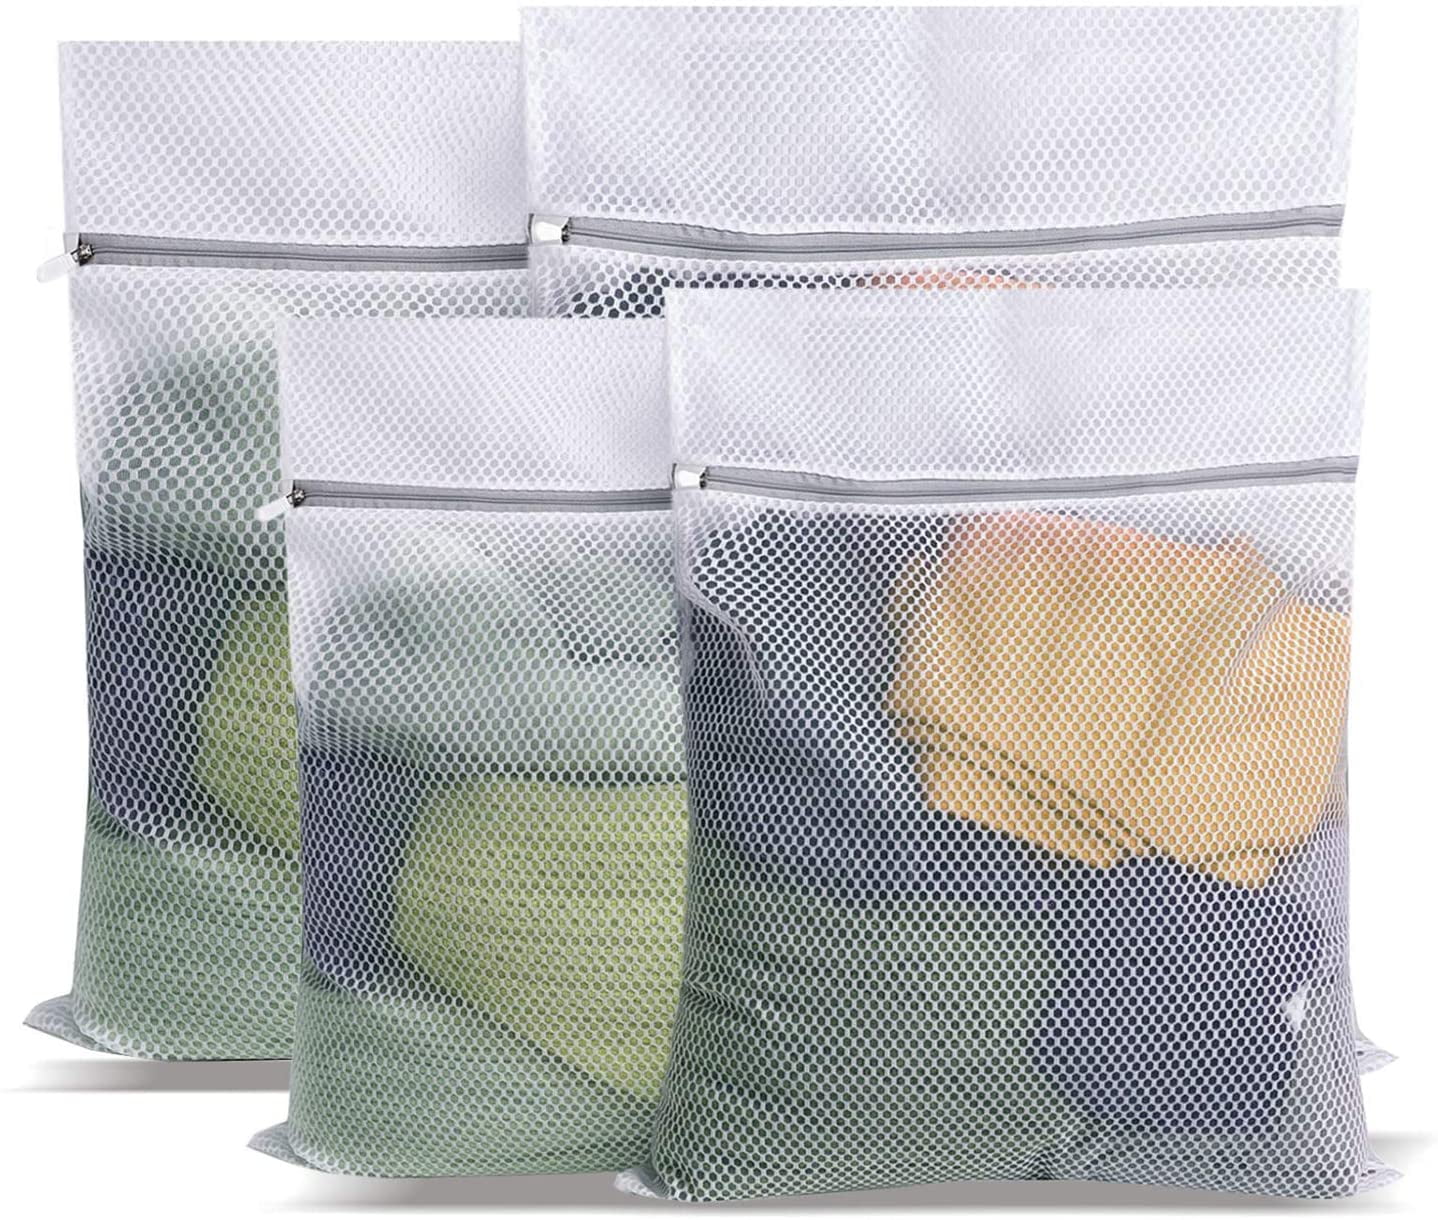 PRETTYGAGA Large Net Washing Bag Durable Honeycomb Mesh Laundry Bag Set ...